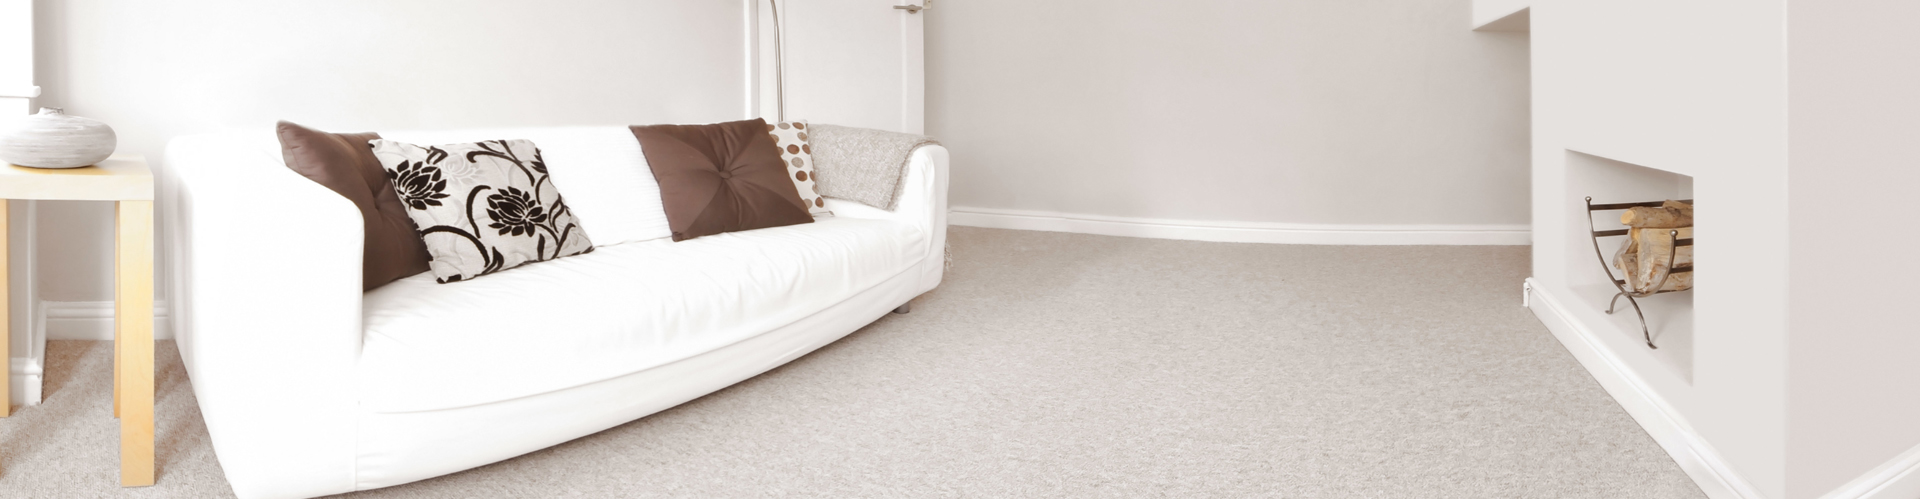 Livingroom Carpet | Shane's Built-In Vacuums Ltd.